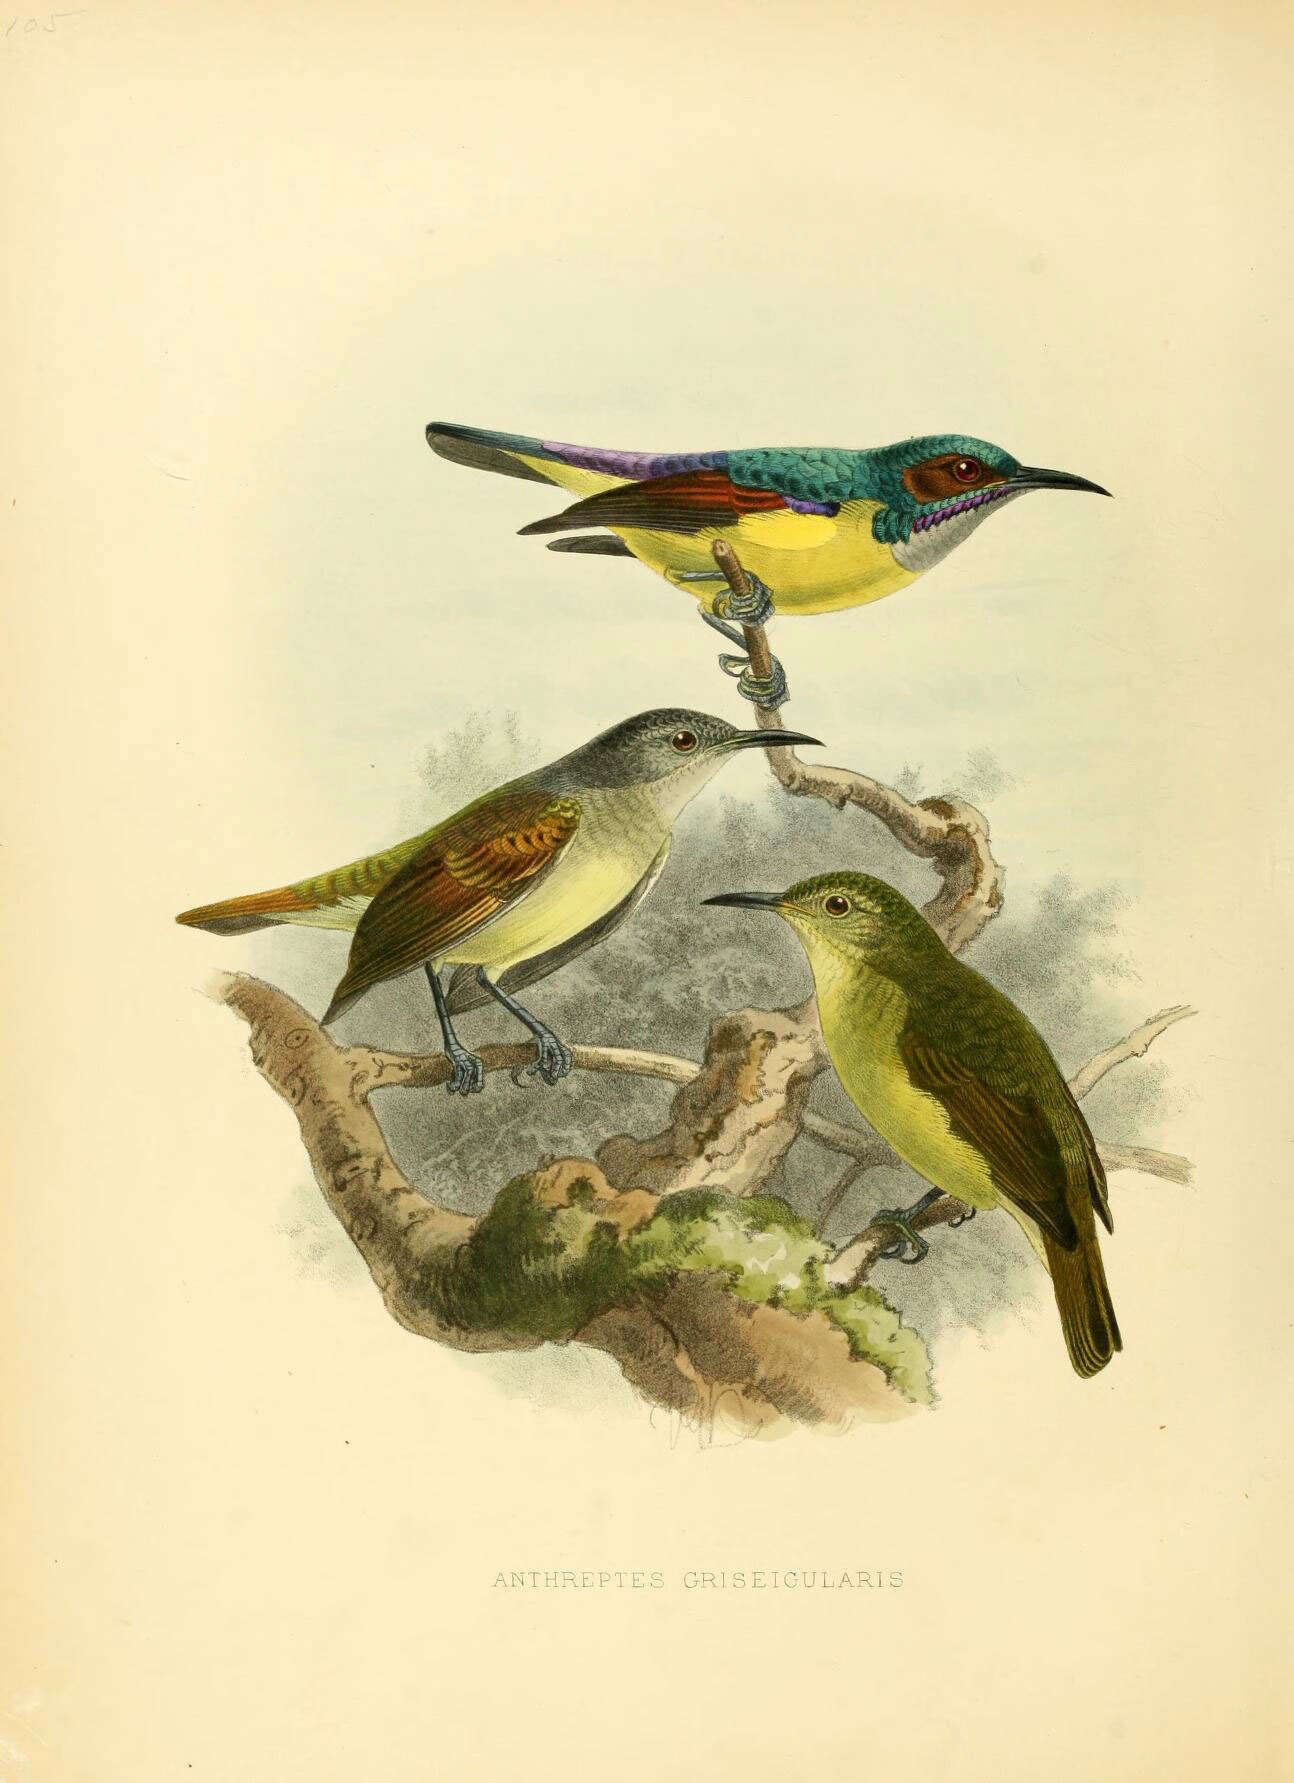 Sivun Anthreptes griseigularis Tweeddale 1878 kuva